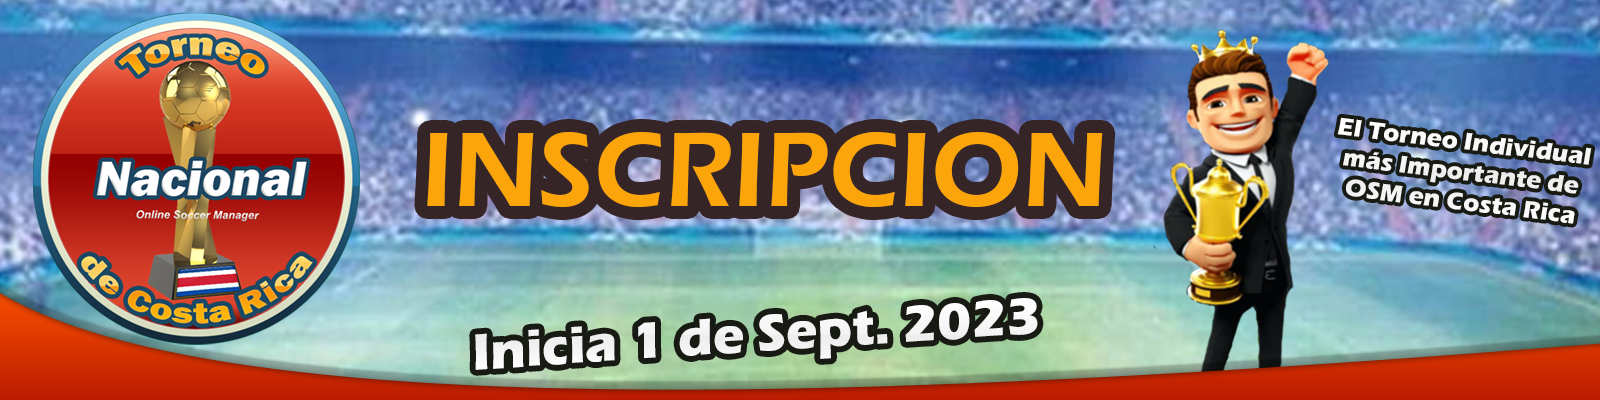 Banner Torneo Nacional 2023 Formulario Google copia.png